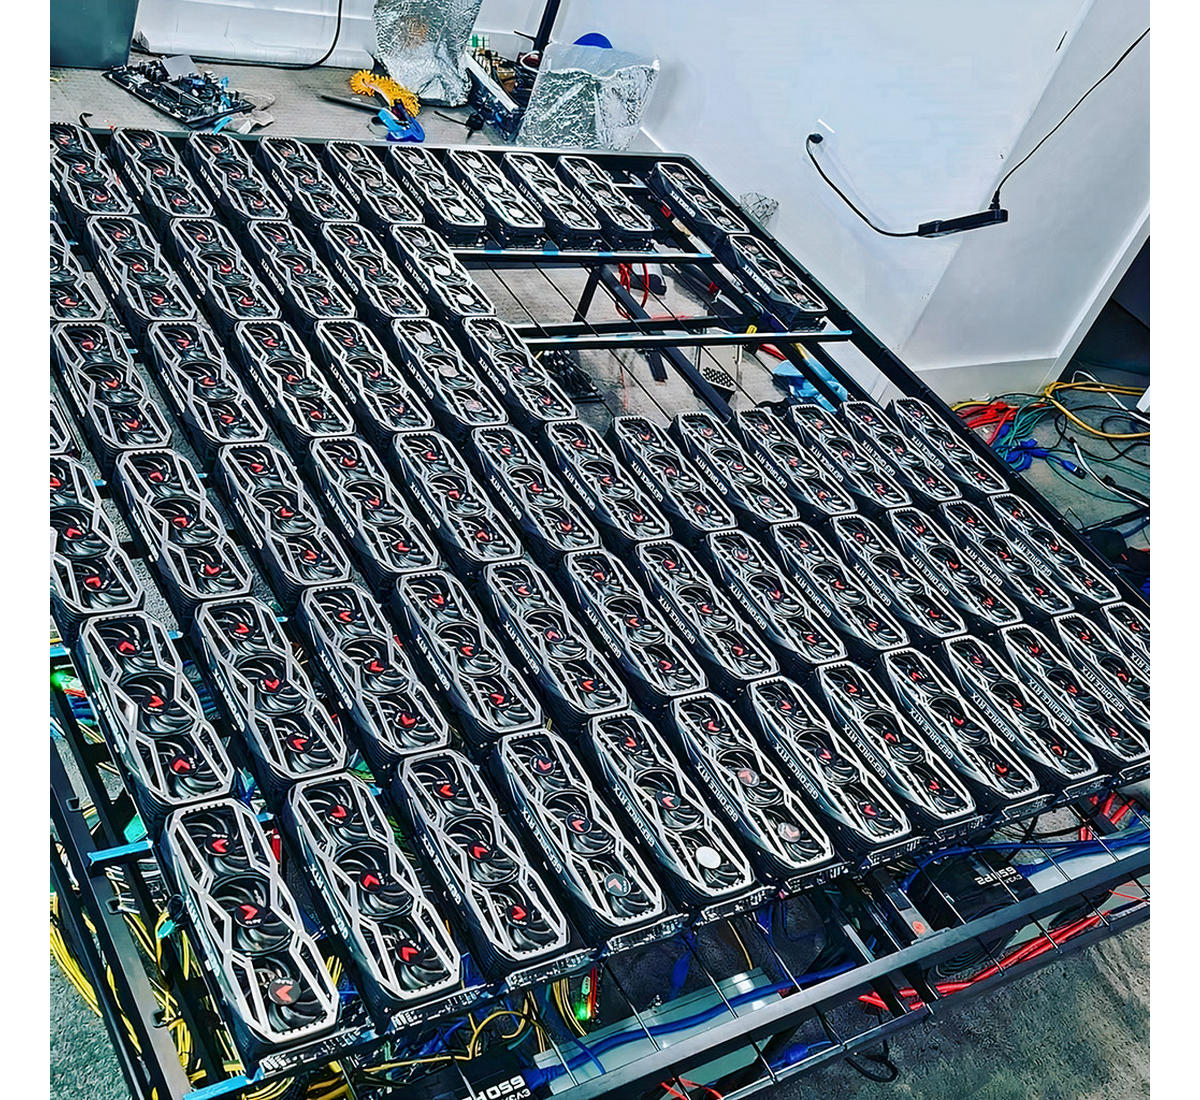 ethereum mining rack